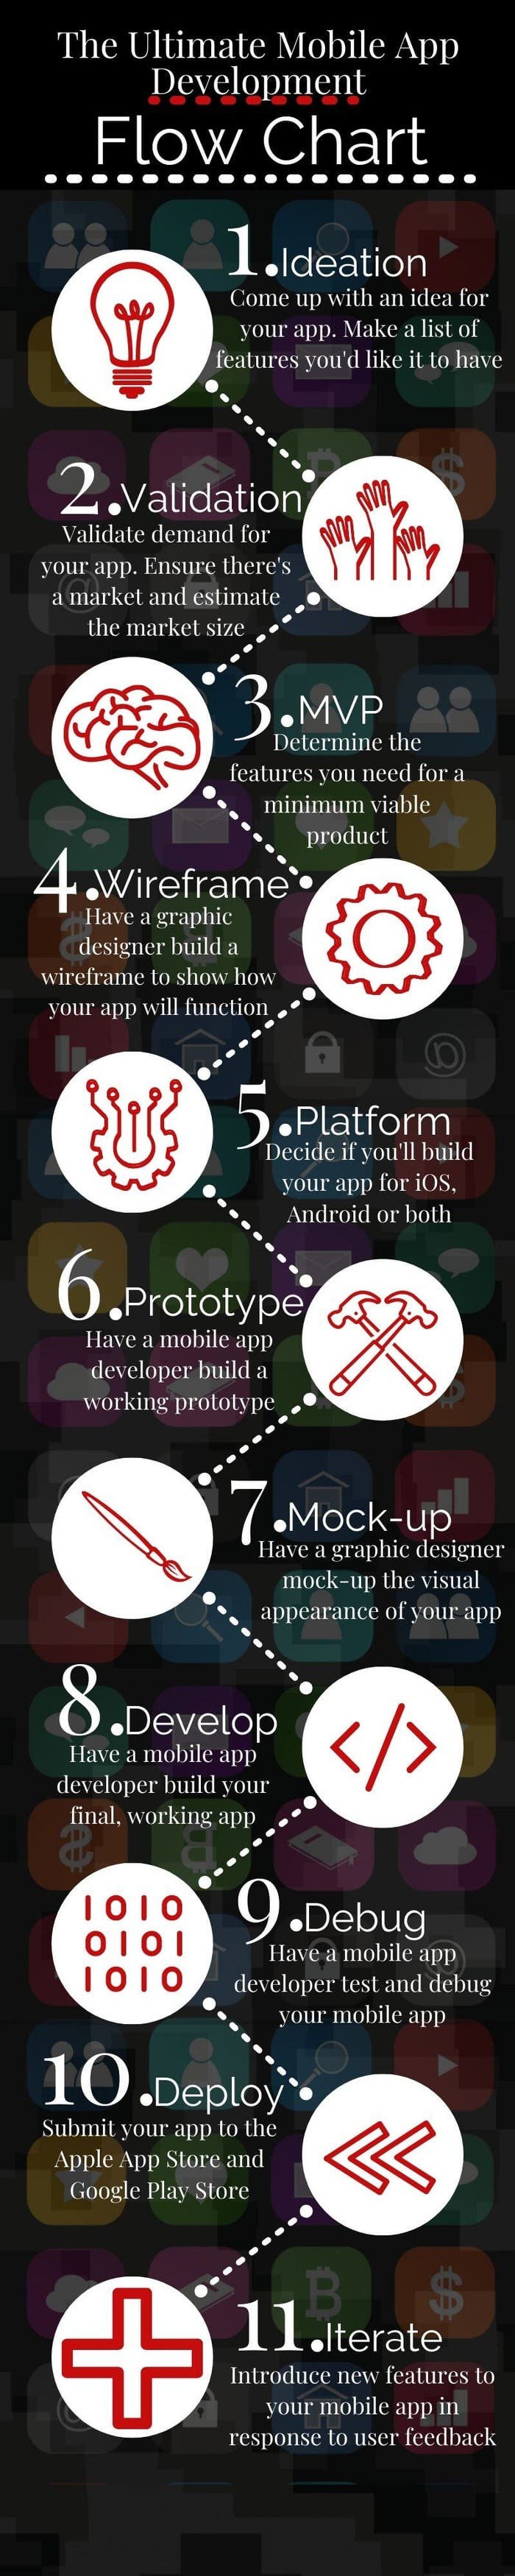 mobile app development process flow chart infographic